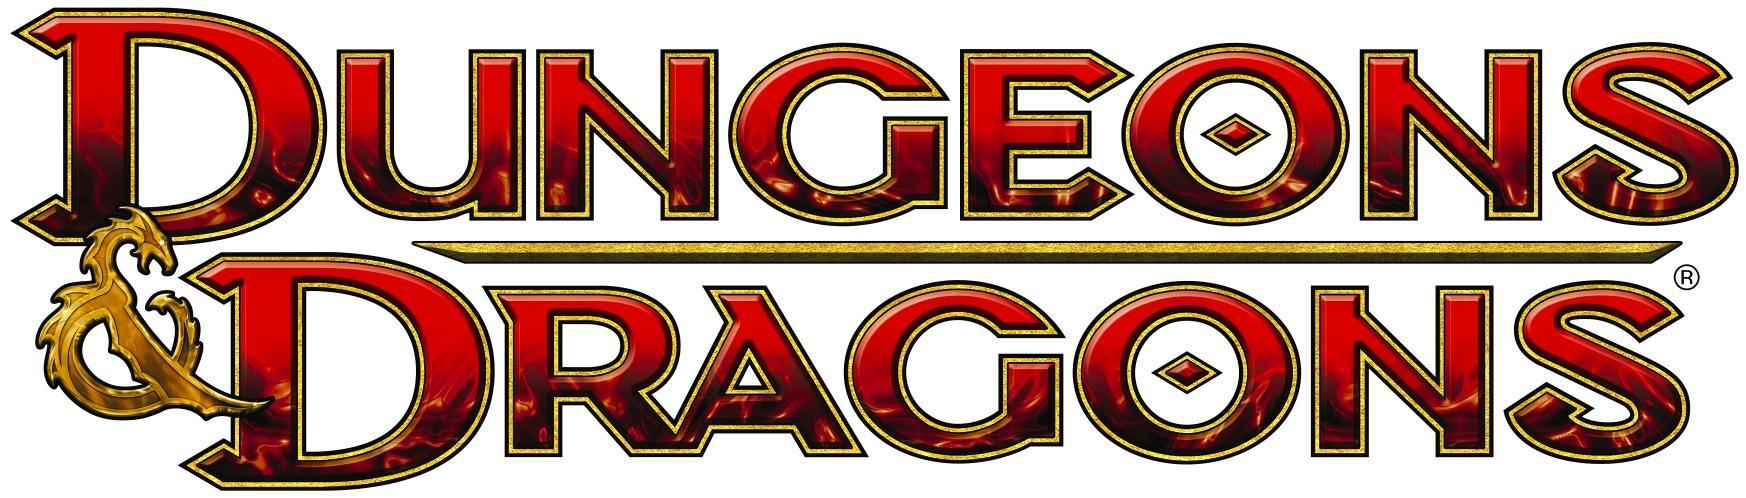 Dungeon Logo - Dungeons & Dragons | Logopedia | FANDOM powered by Wikia